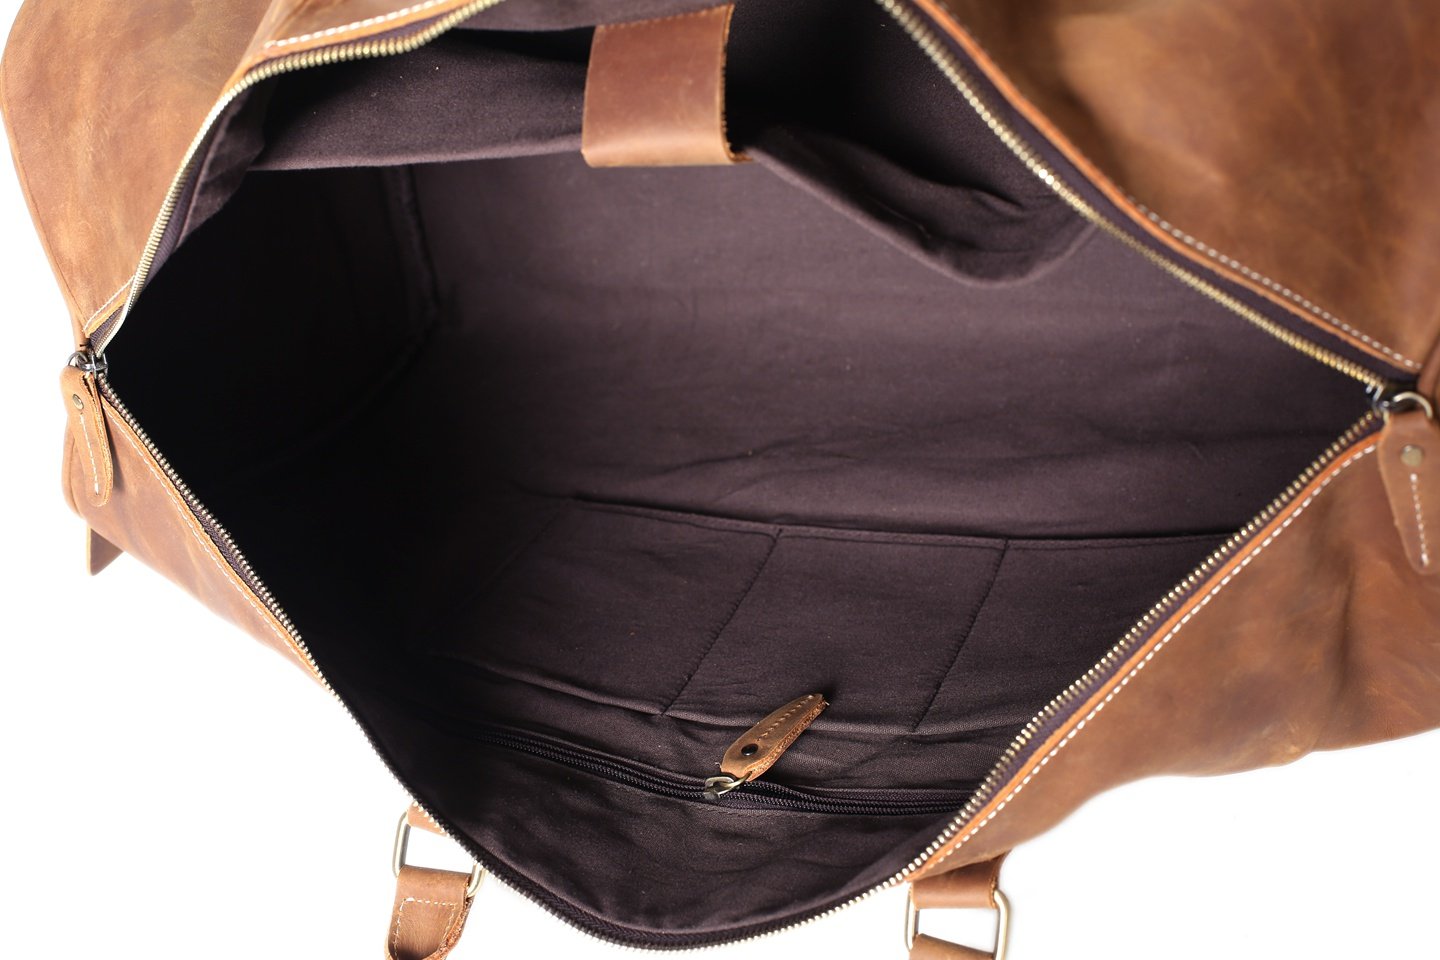 Handmade Vintage Leather Overnight Duffel Bag Travel Bag Holdall